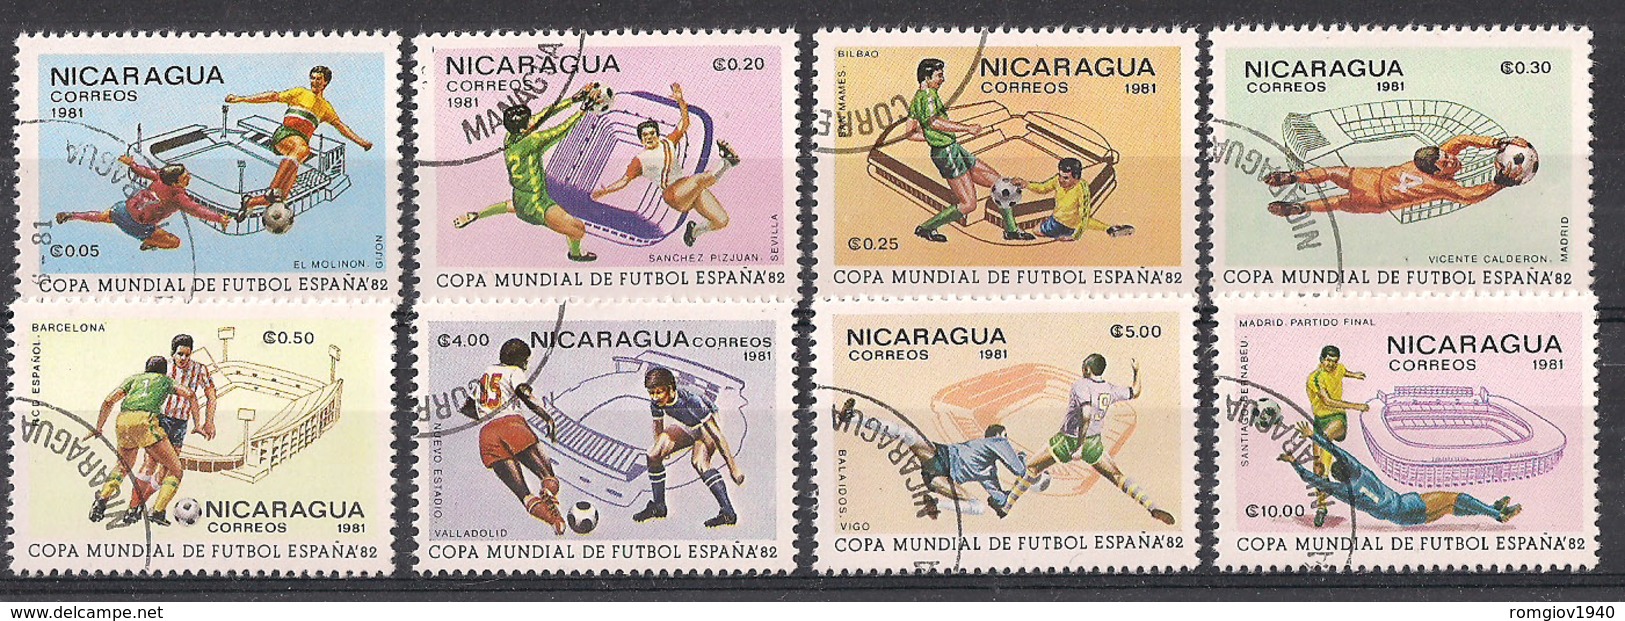 NICARAGUA   1981   ESPANA 82   YVERT  1145-1152   USATA   XF - Nicaragua